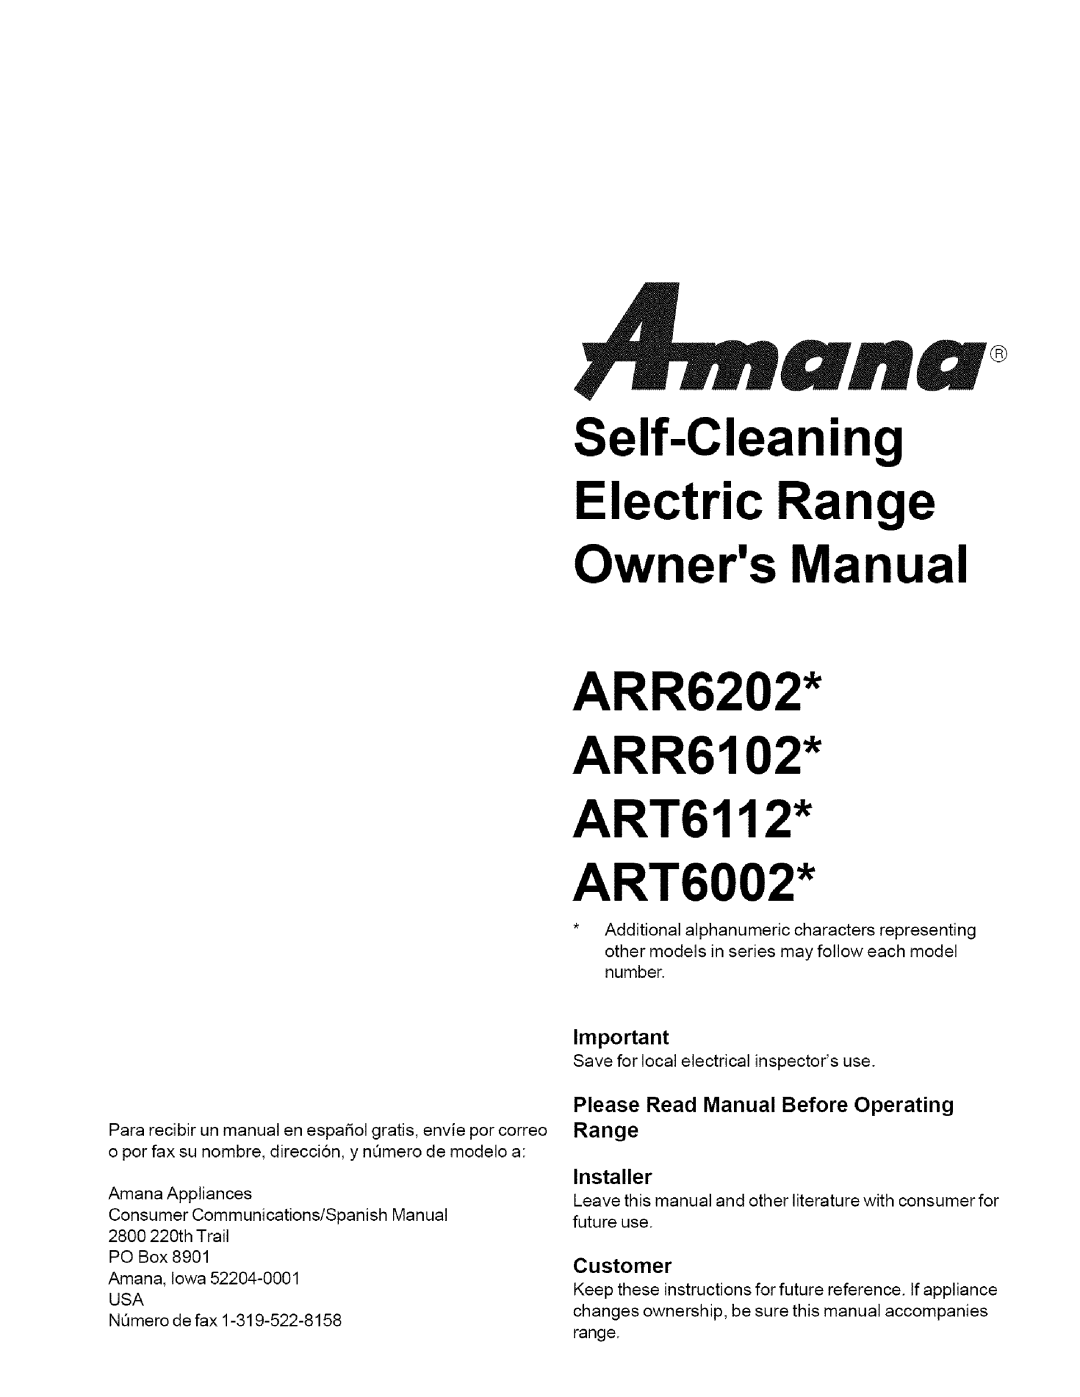 Amana owner manual Please Read Manual Before Operating Range, Installer, Customer, ARR6202 ARR6102 ART6112 ART6002 